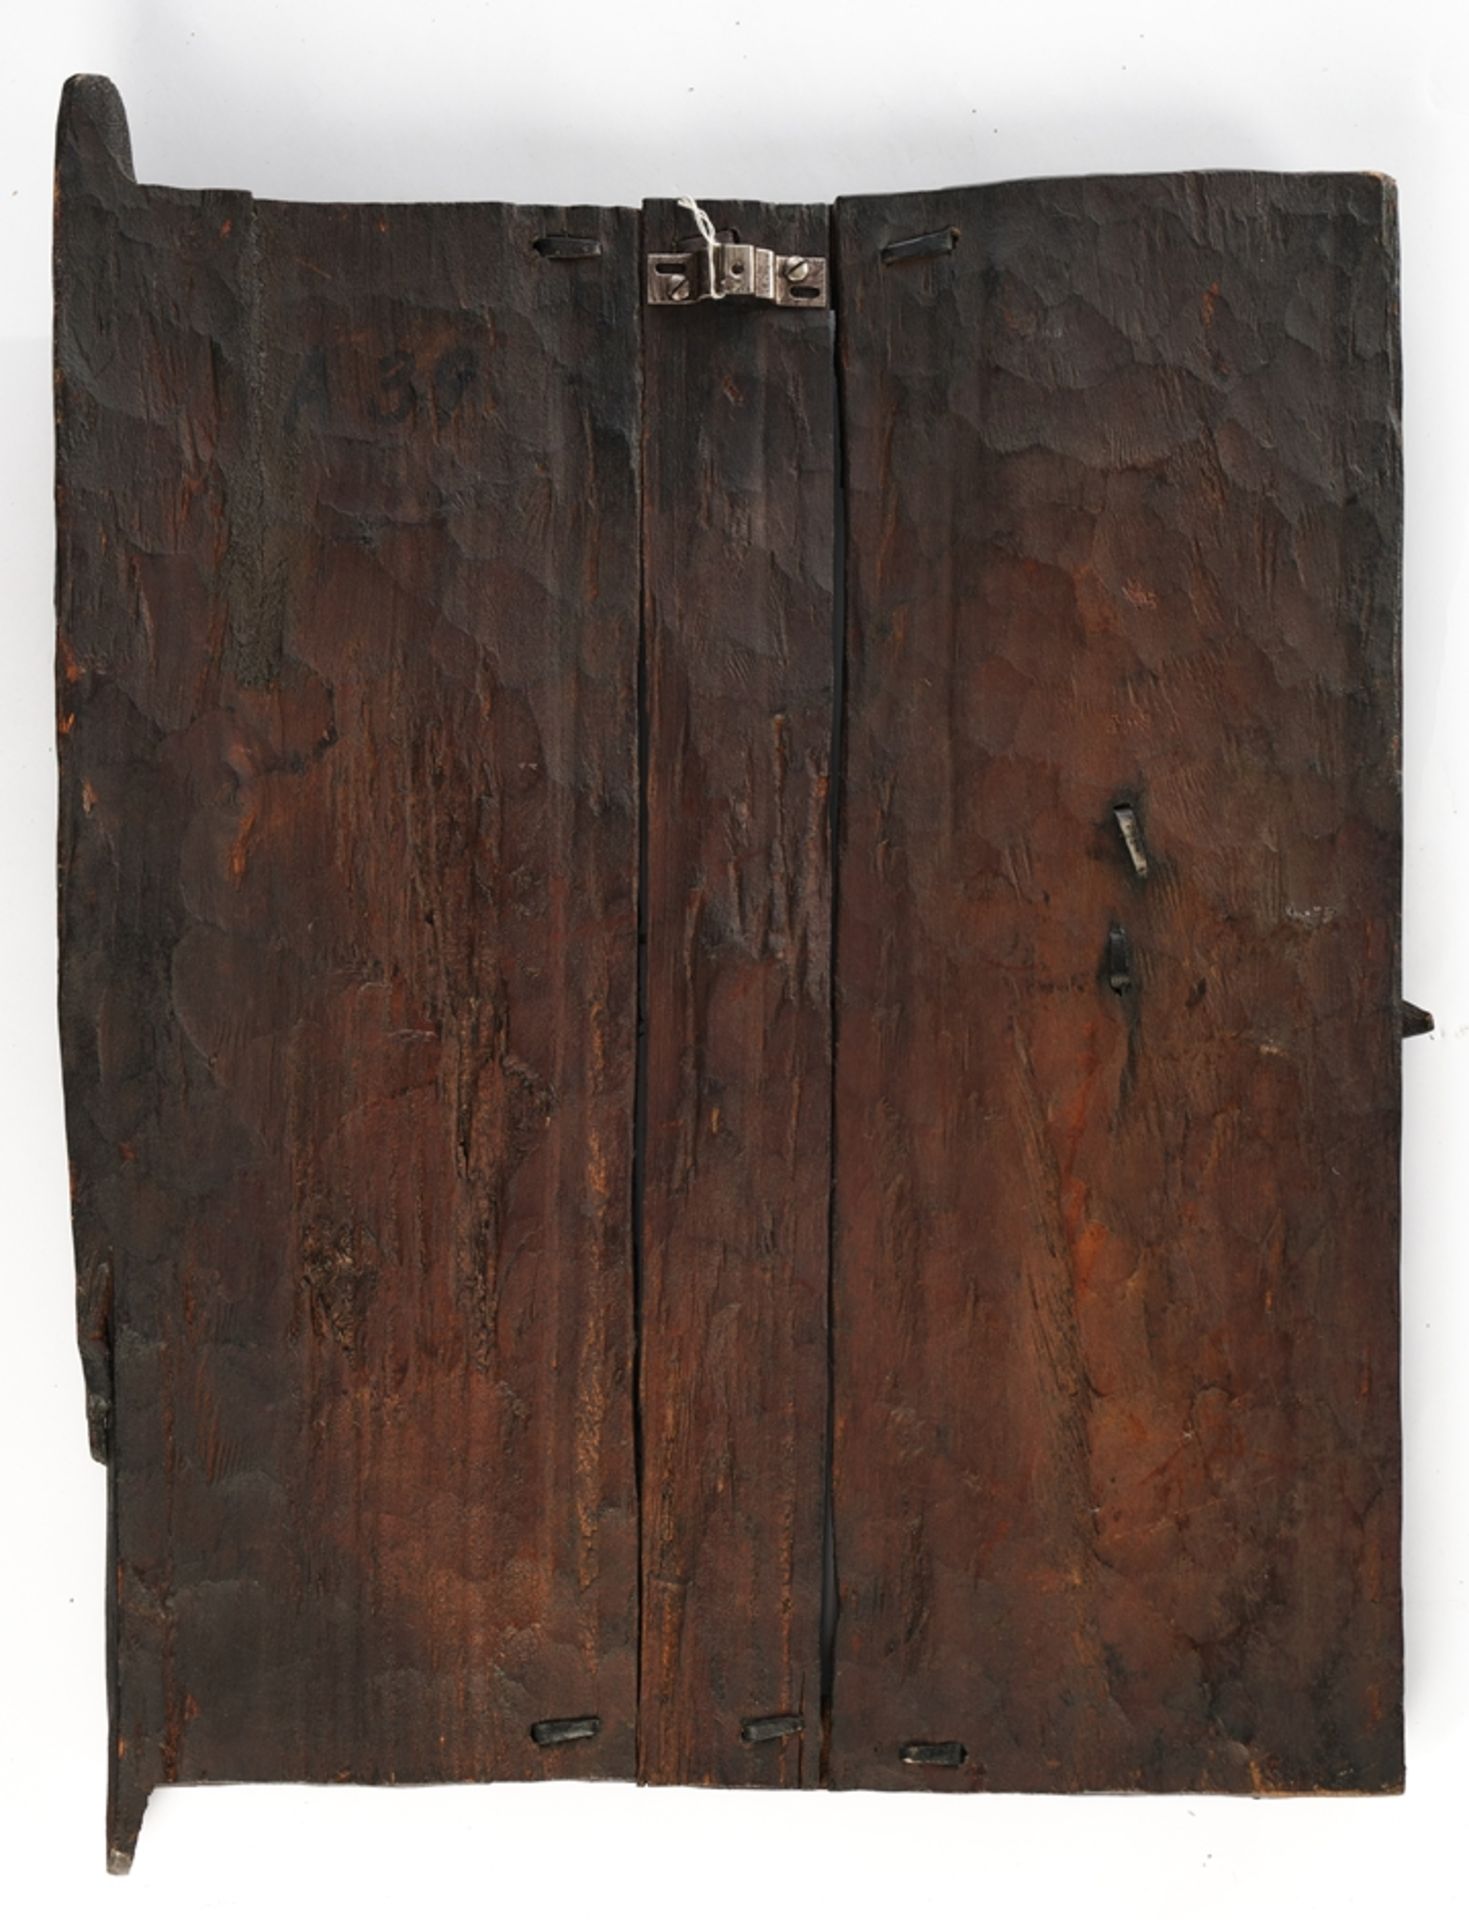 Holztür, Dogon, Mali, Afrika, vielfigurig beschnitzt, 52 x 39.5 cm. - Image 2 of 2